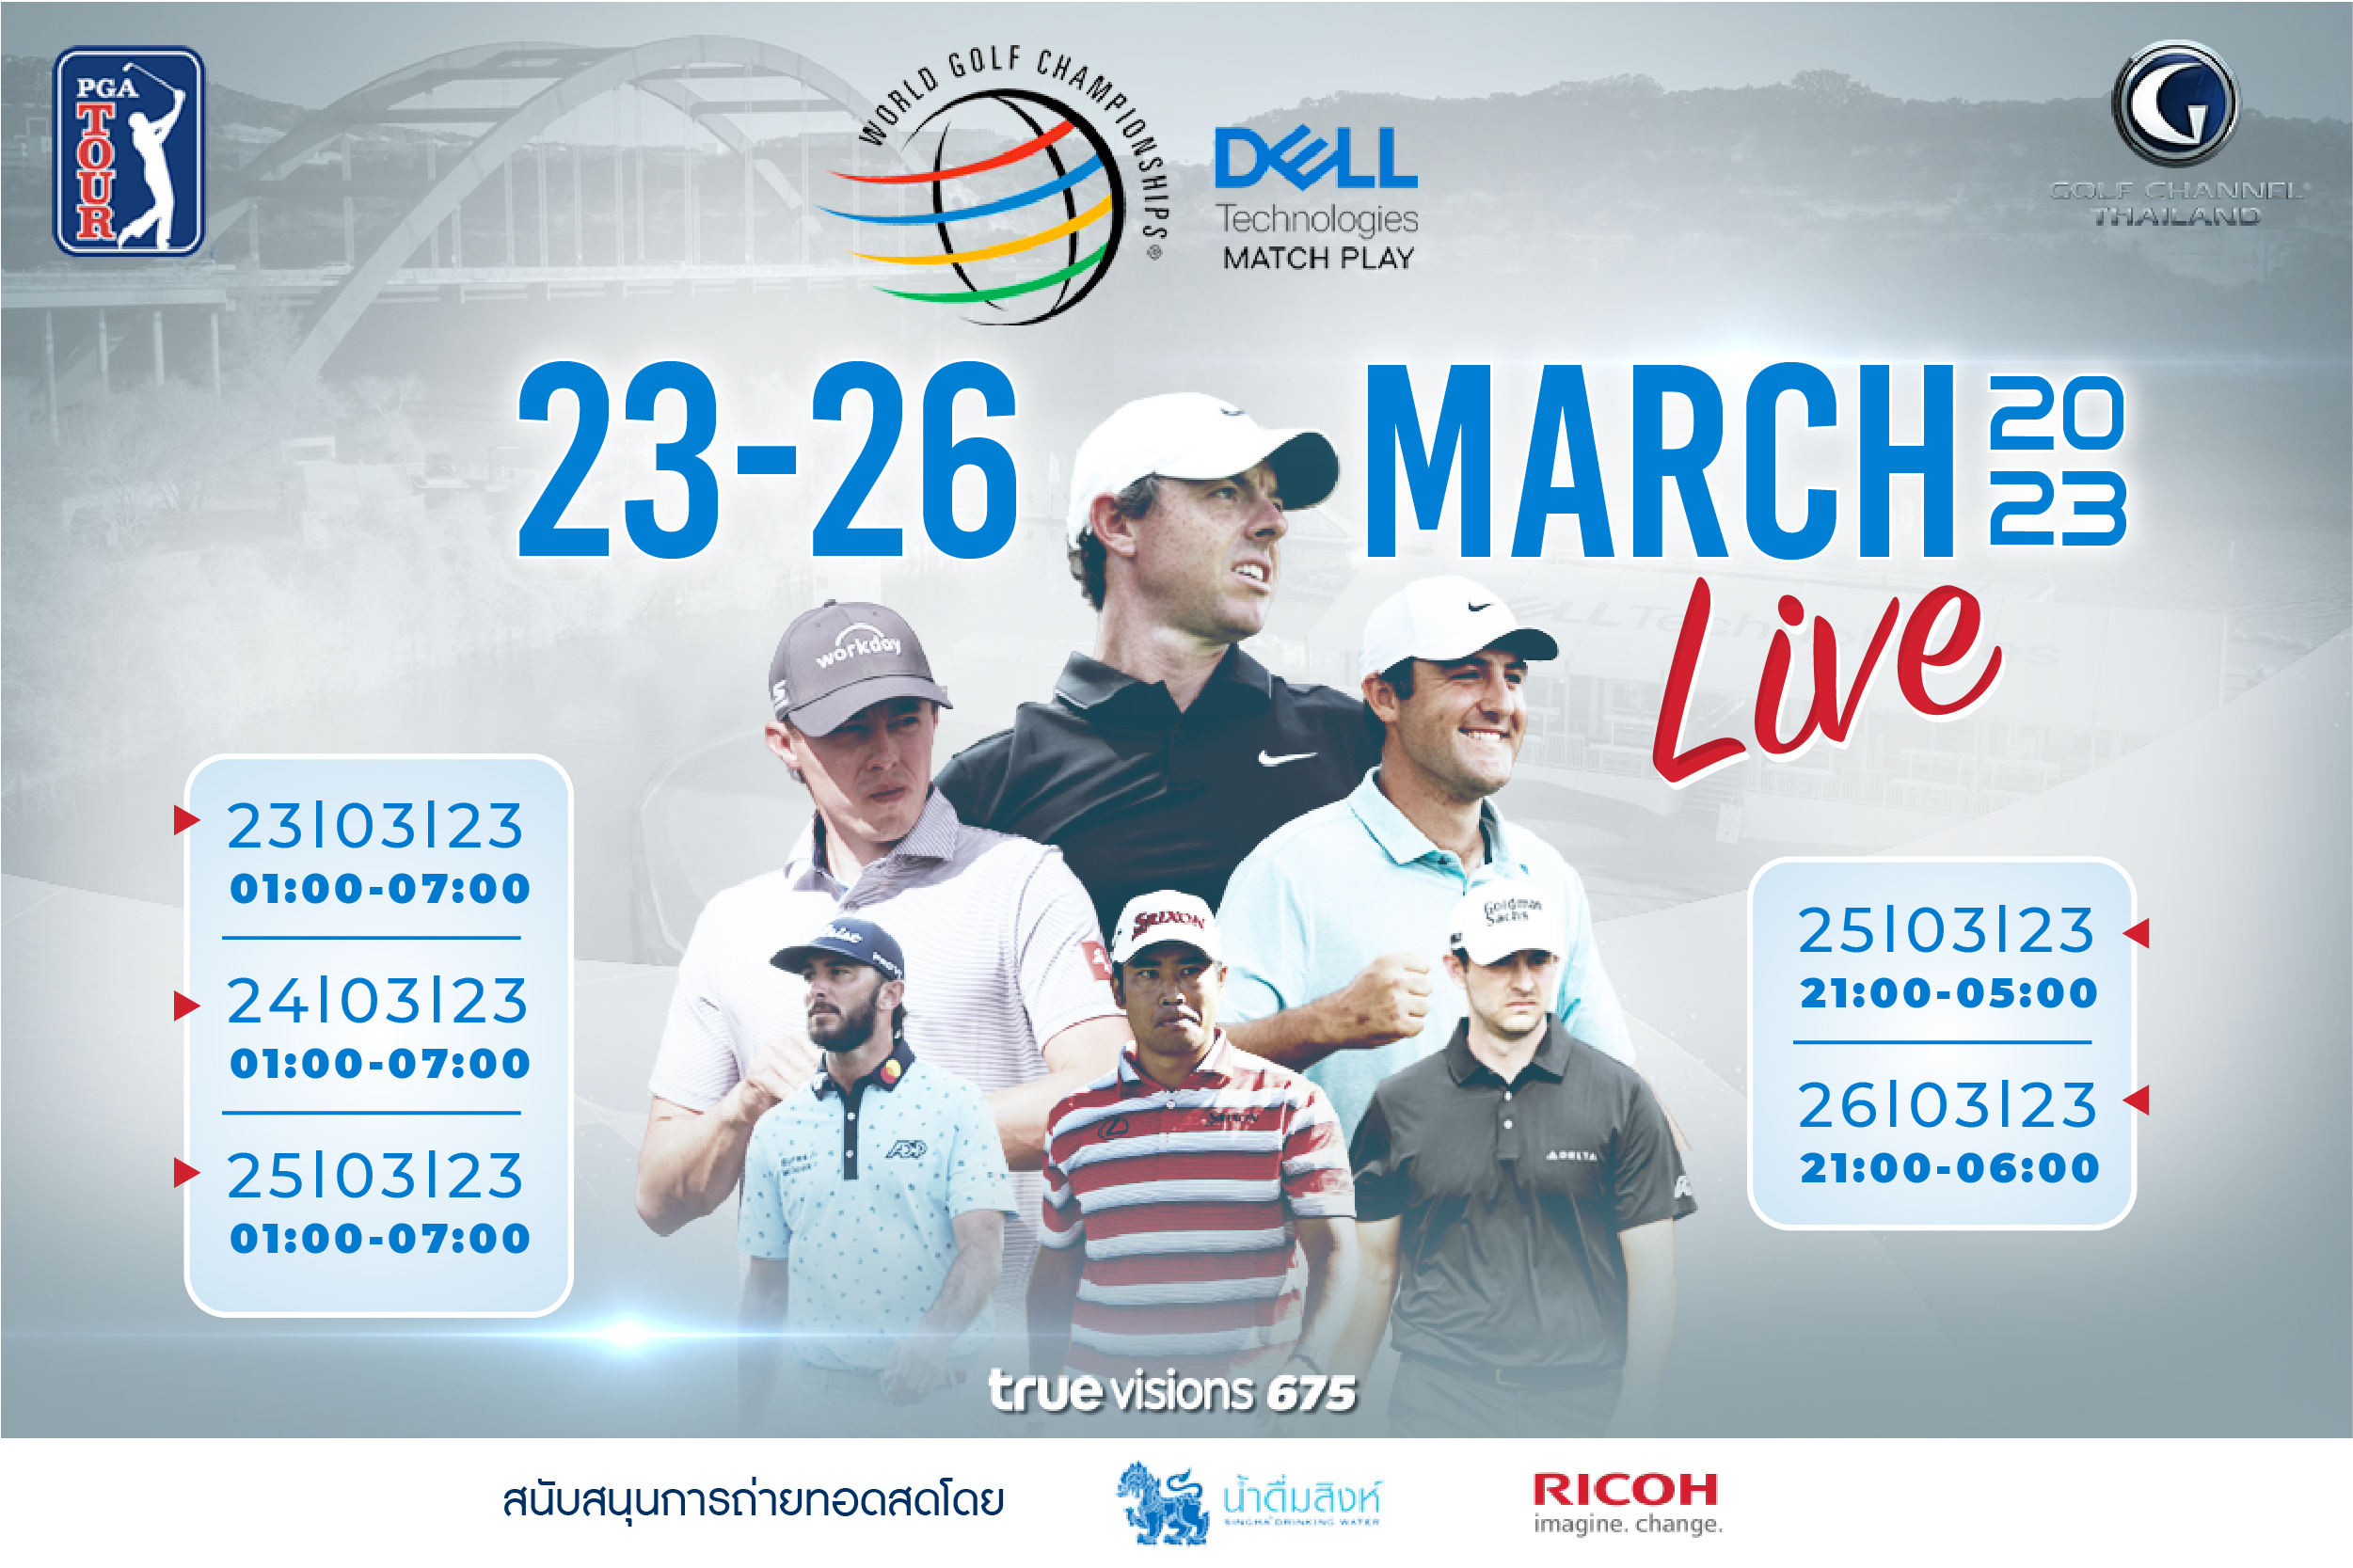 2023 World Golf Championships Dell Technologies Match Play Golf